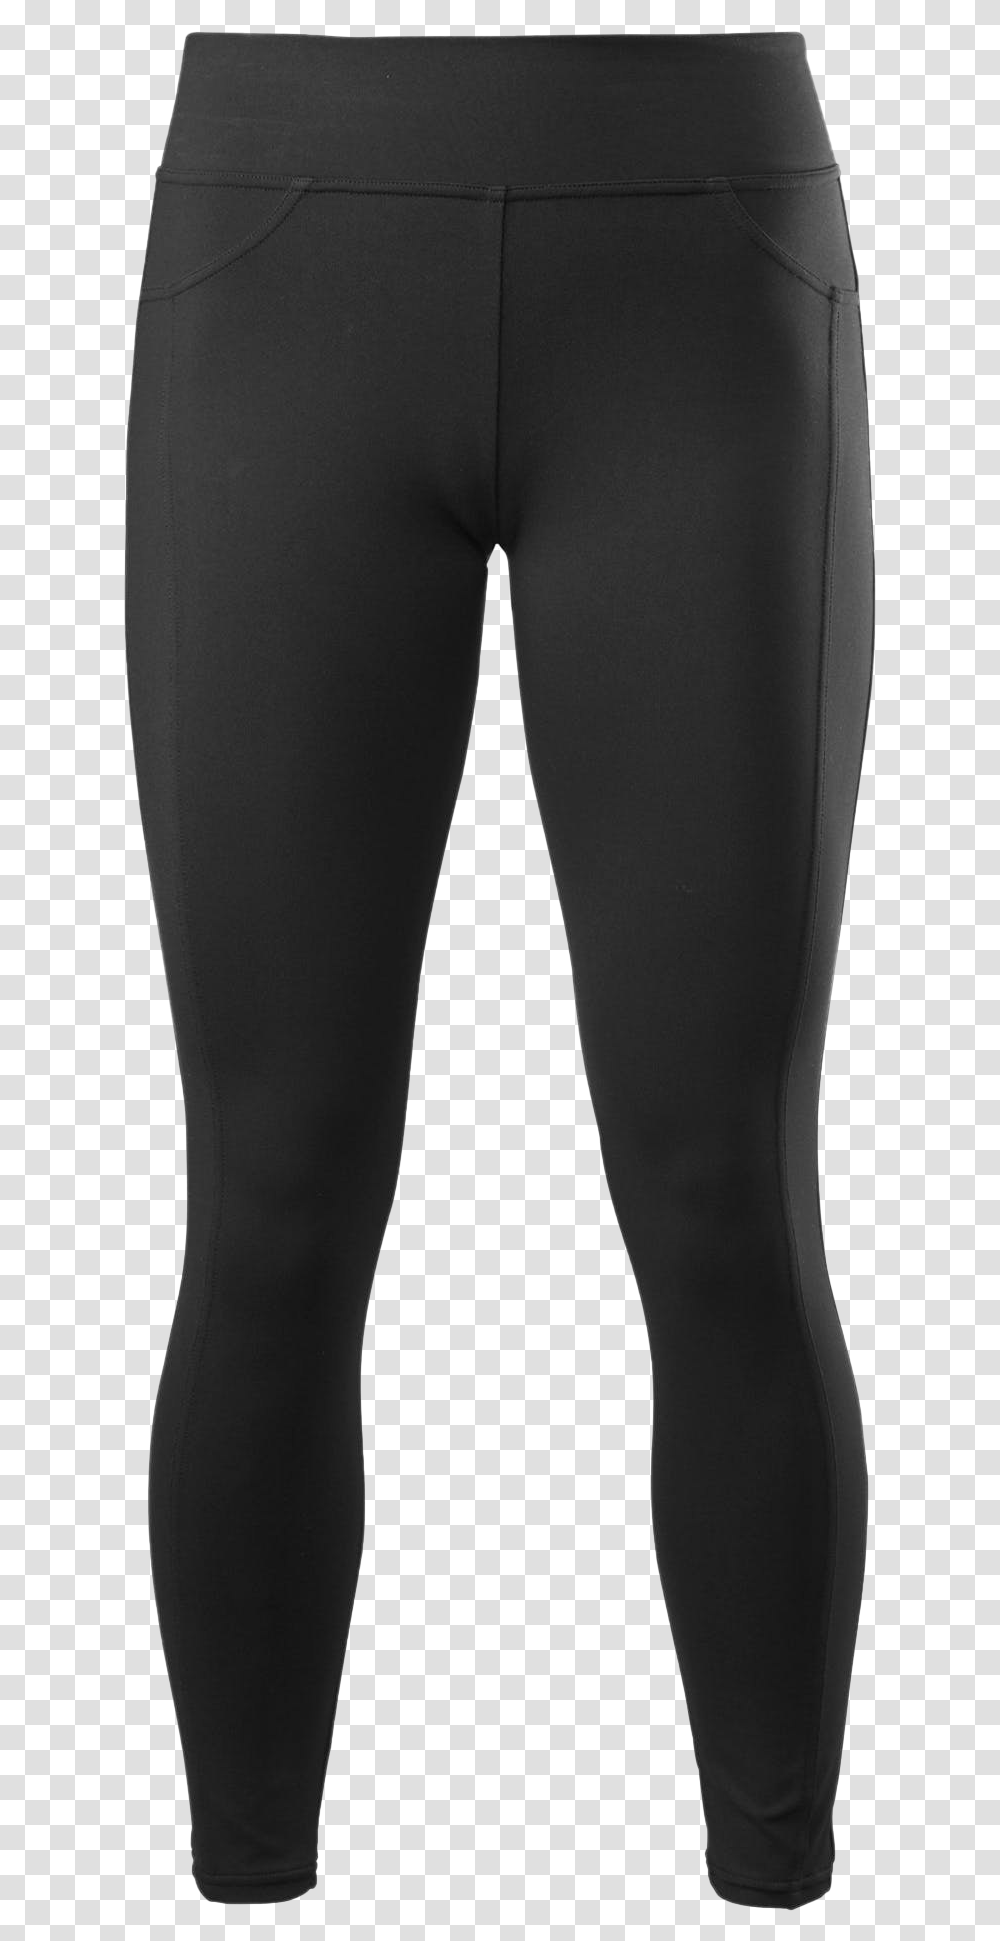 Leggings Image Under Armor Pants, Apparel, Tights Transparent Png